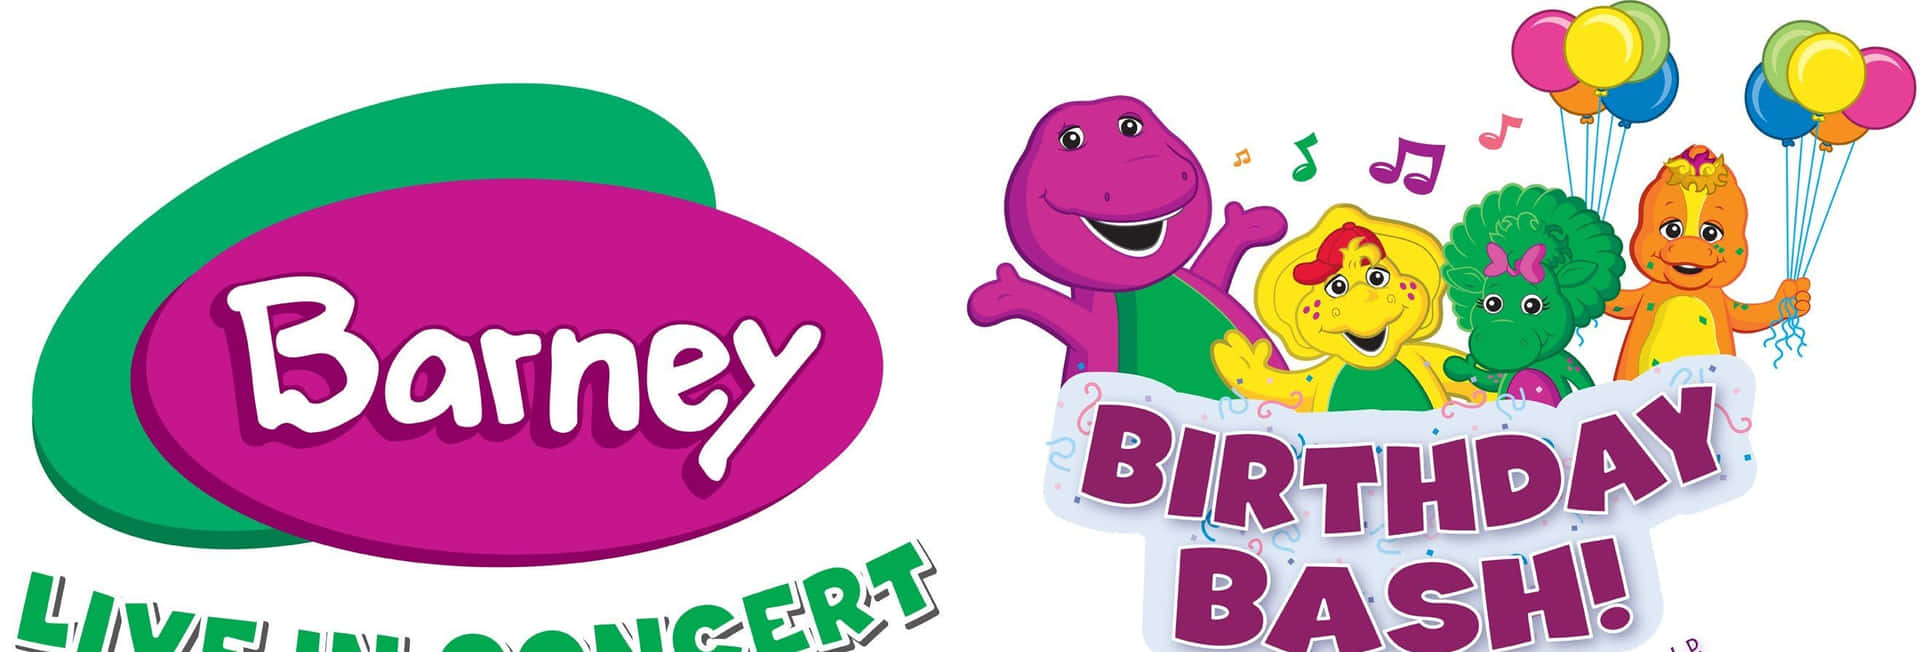 Barney the Purple Dinosaur with Friends Wallpaper